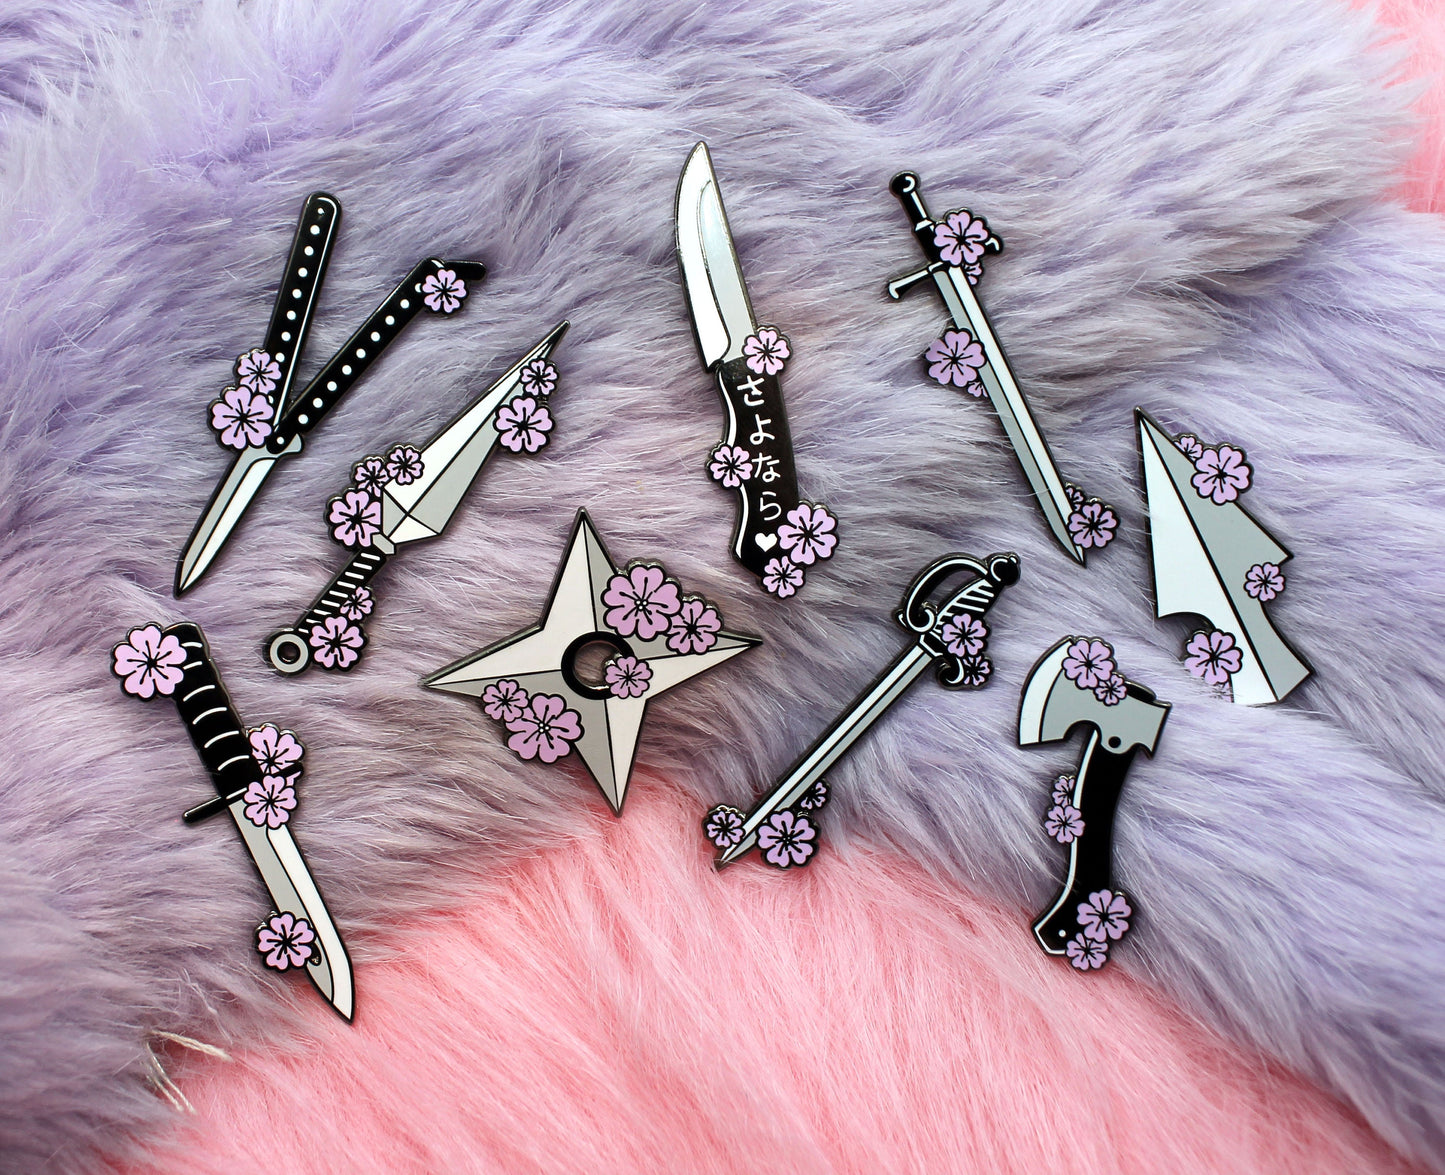 Sakura Rapier Sword Enamel Pin (A Grade, Hard, Black Nickel) - Sakura Blades Pin Set